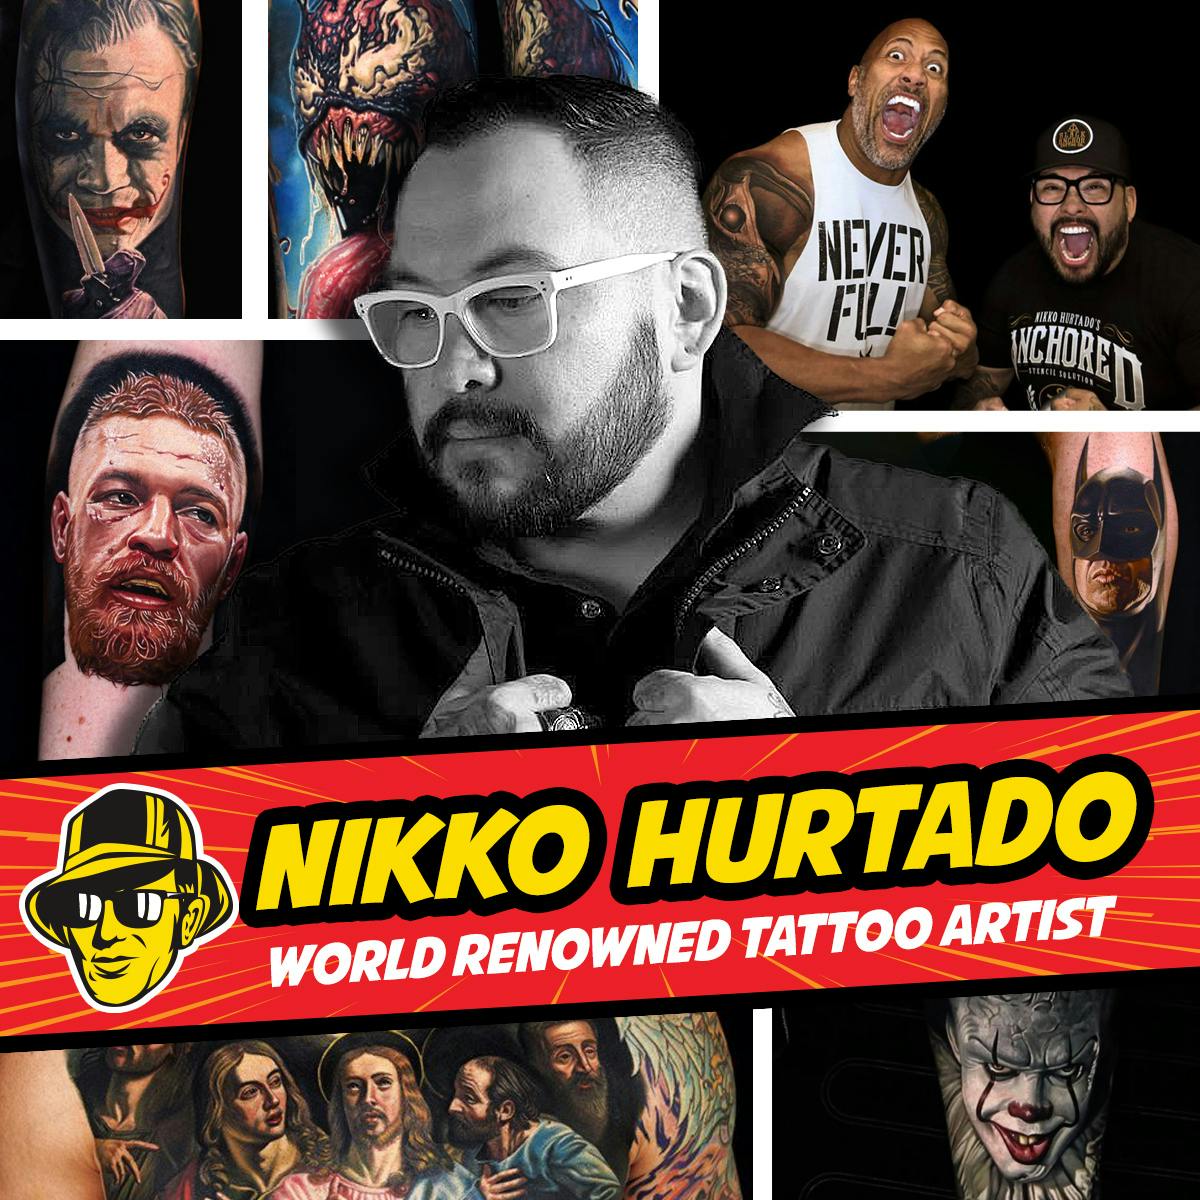 Nikko Hurtado photo collage for Celebrity Fan Fest